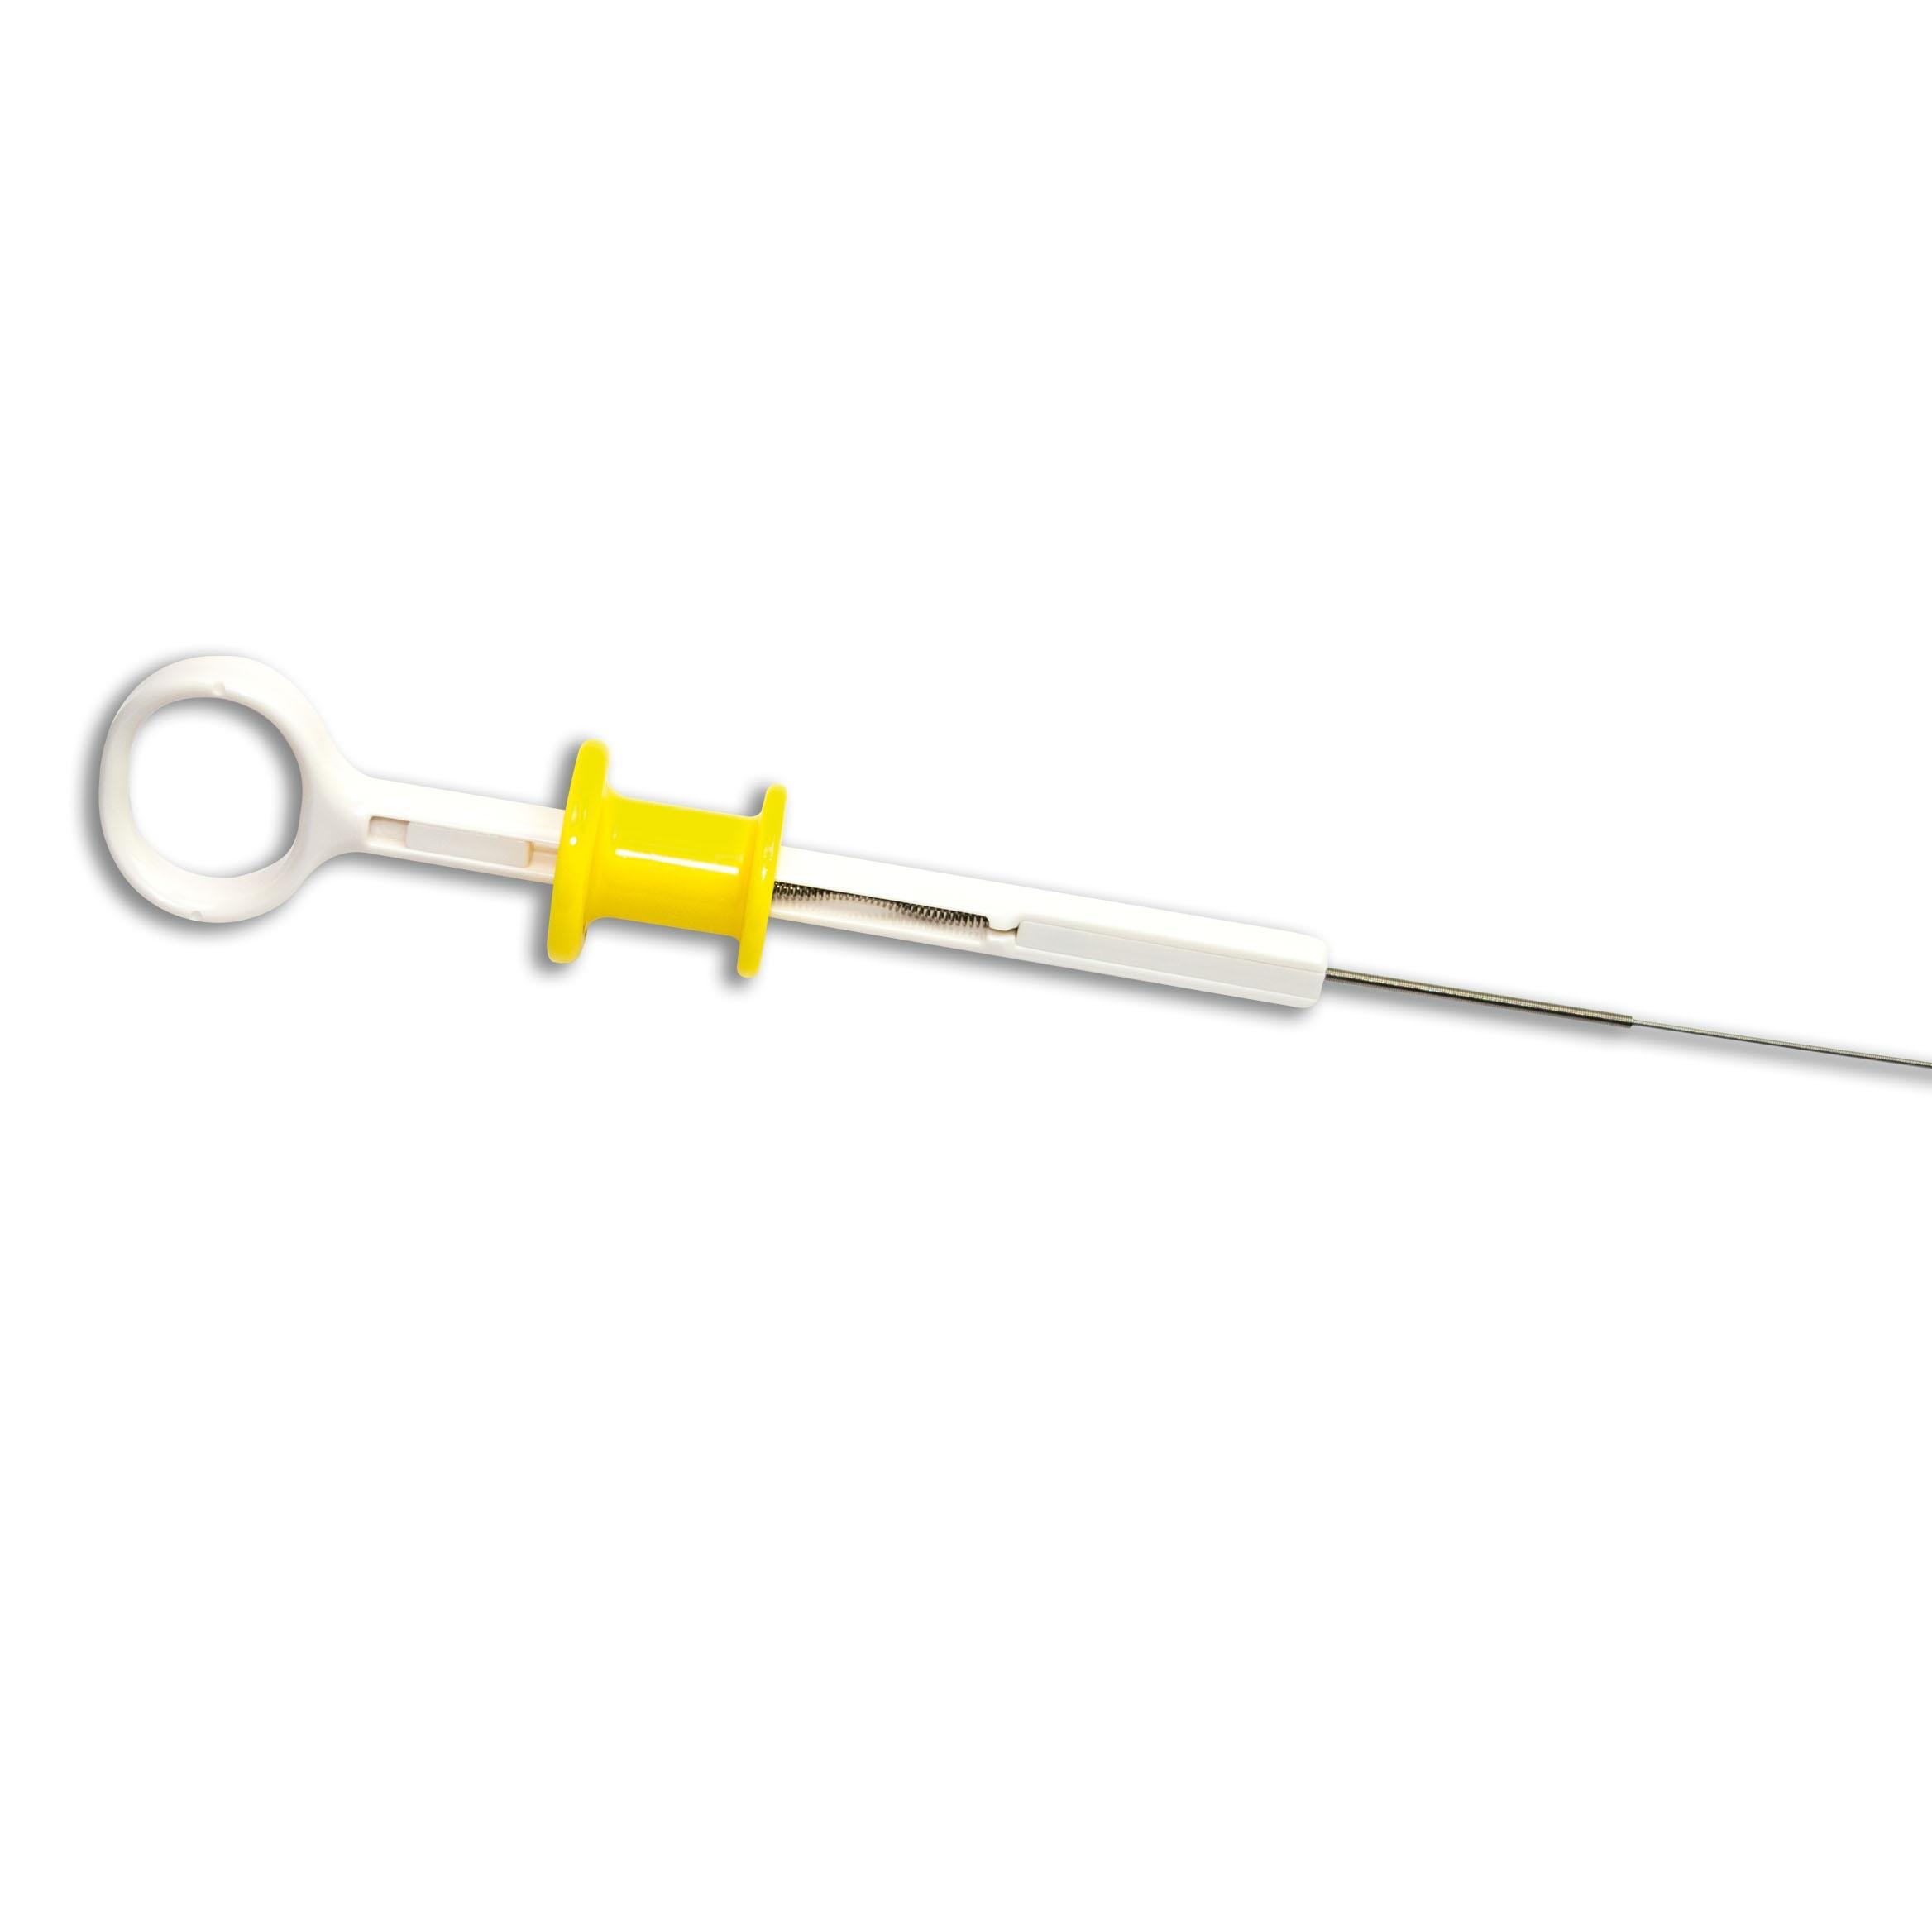 NeoBiteUro® Biopsy Forceps handle